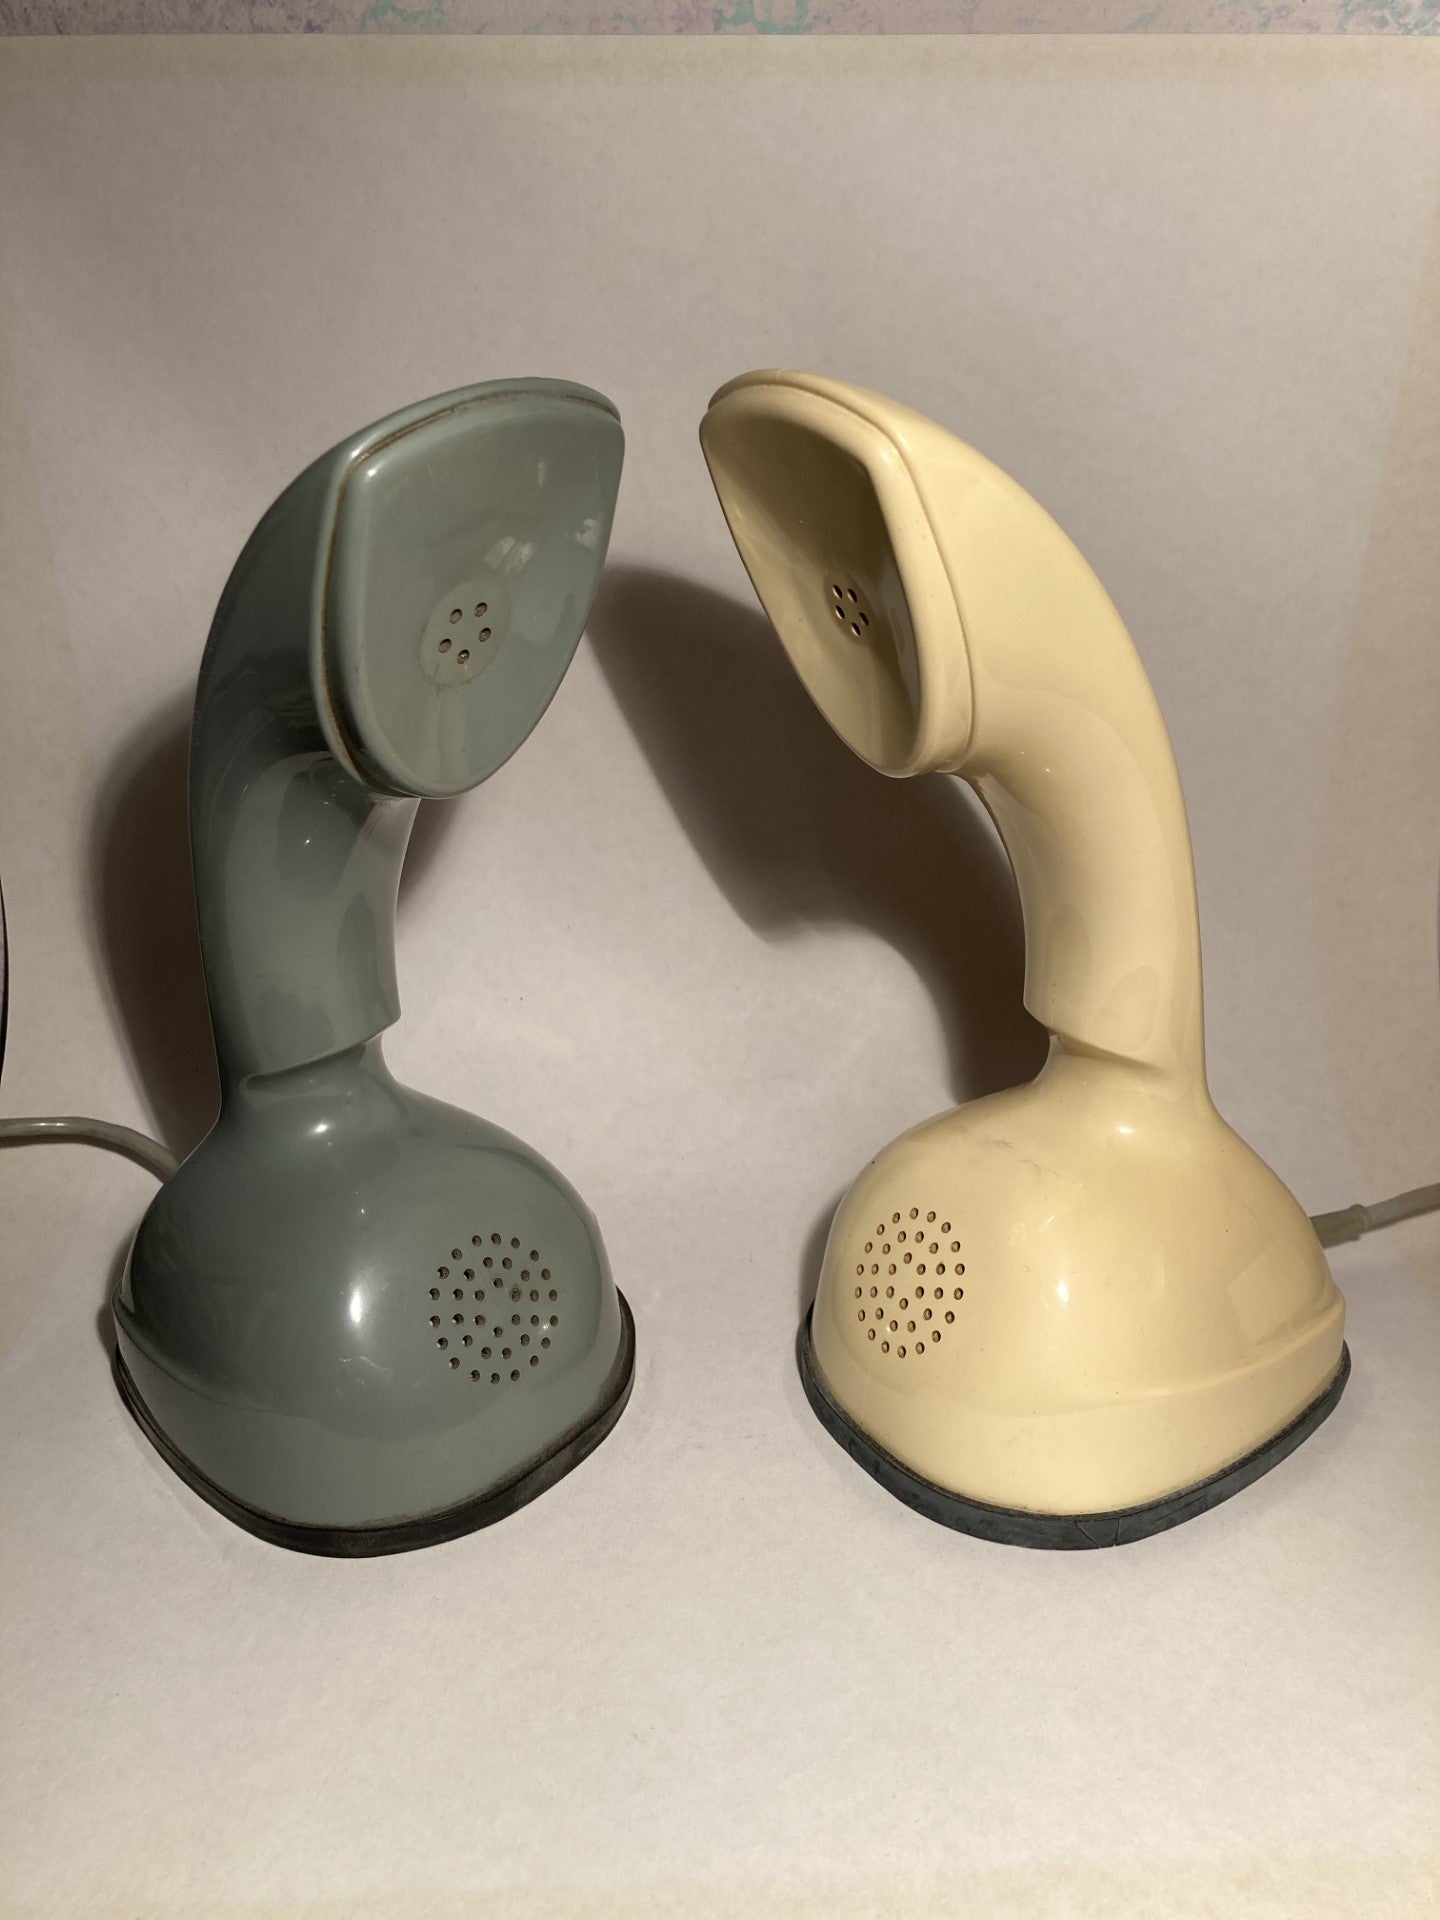 2 beautiful retro Ericofon Cobra telephones from ericsson - no. 01351